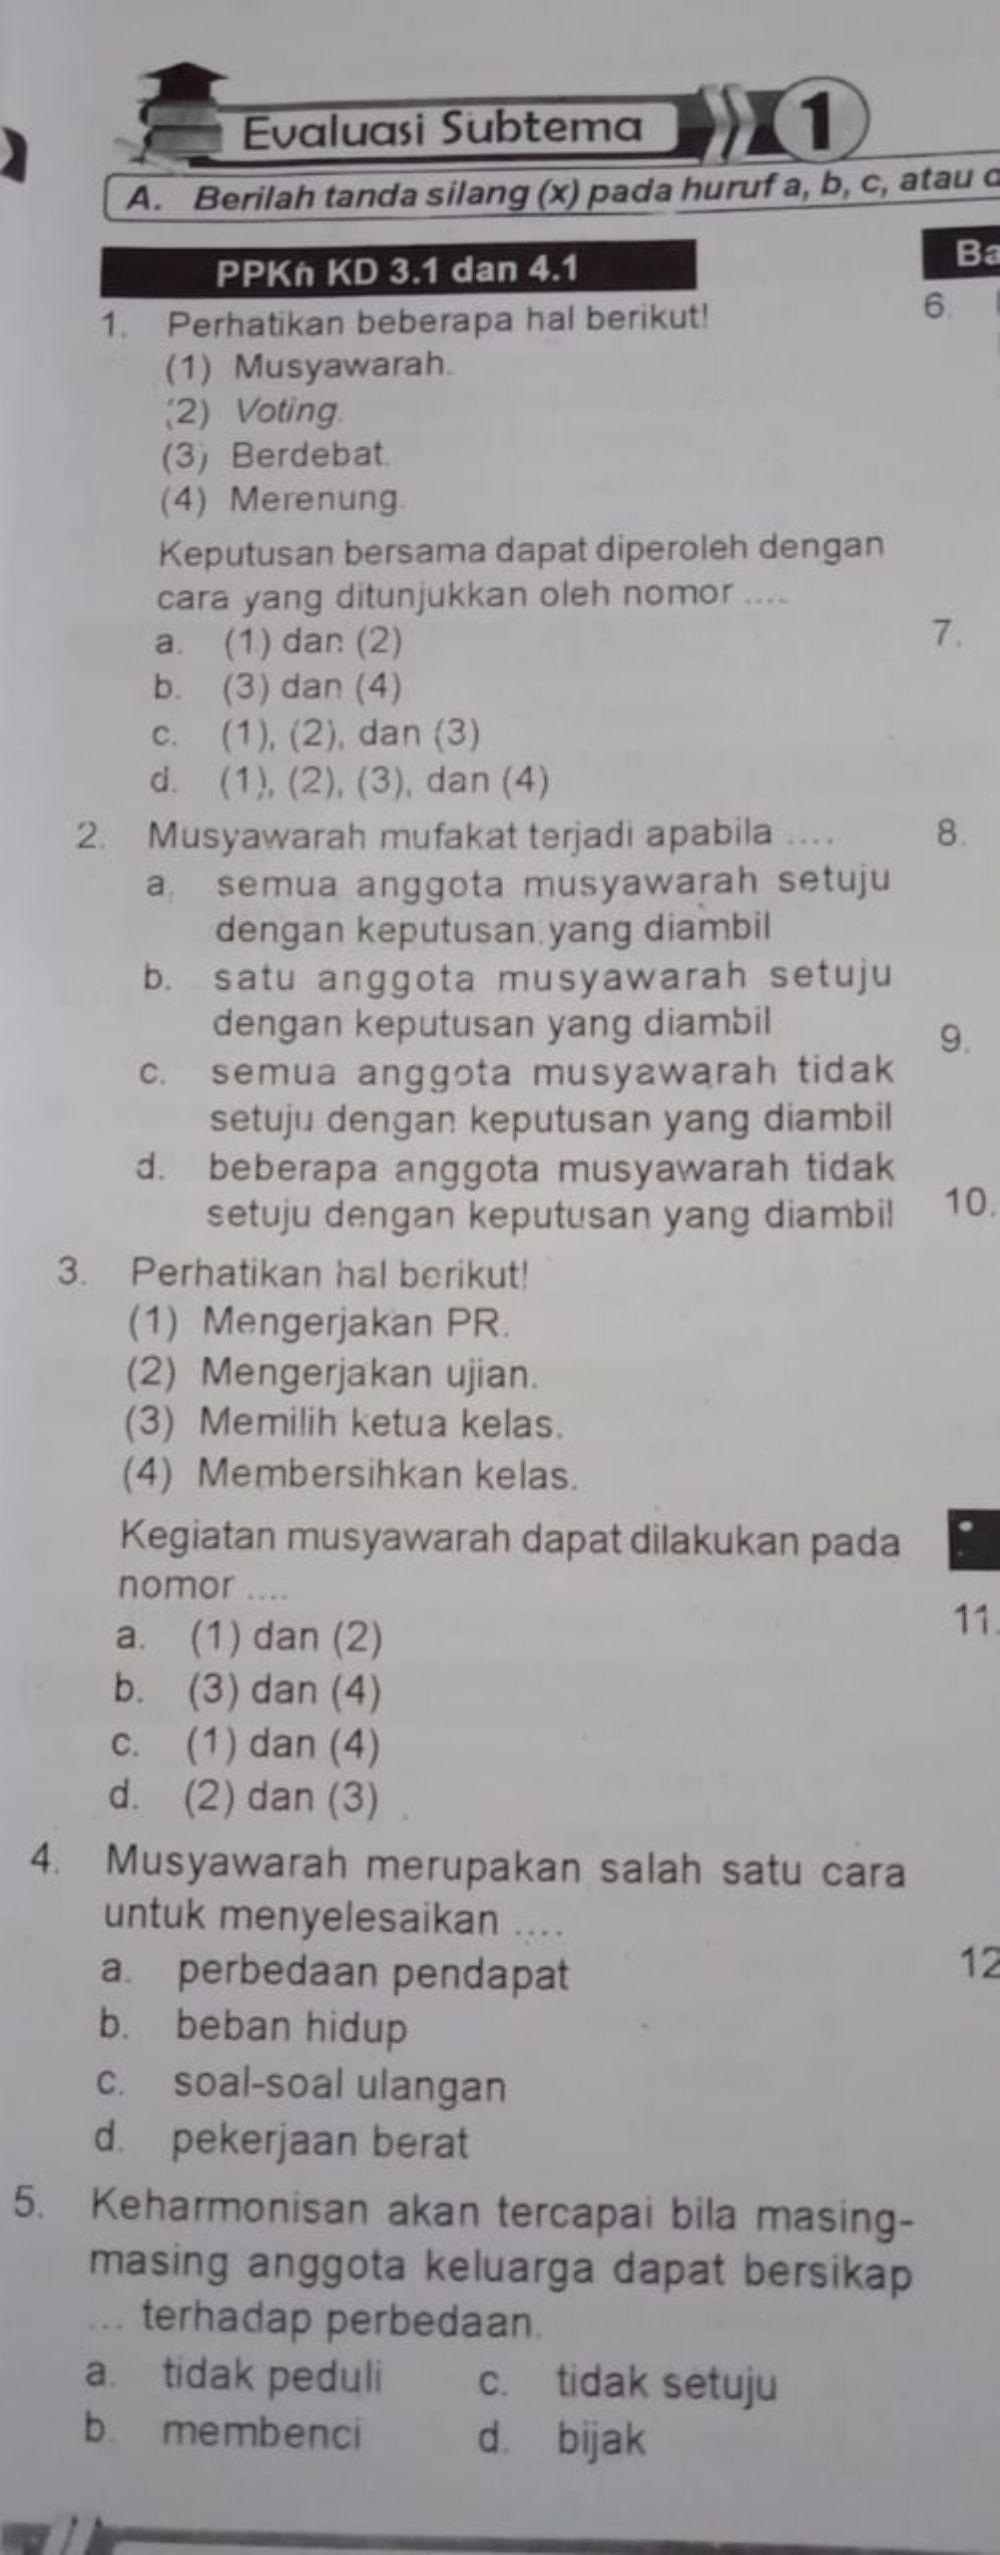 Tema 3 Subtema 1 Musyawarah